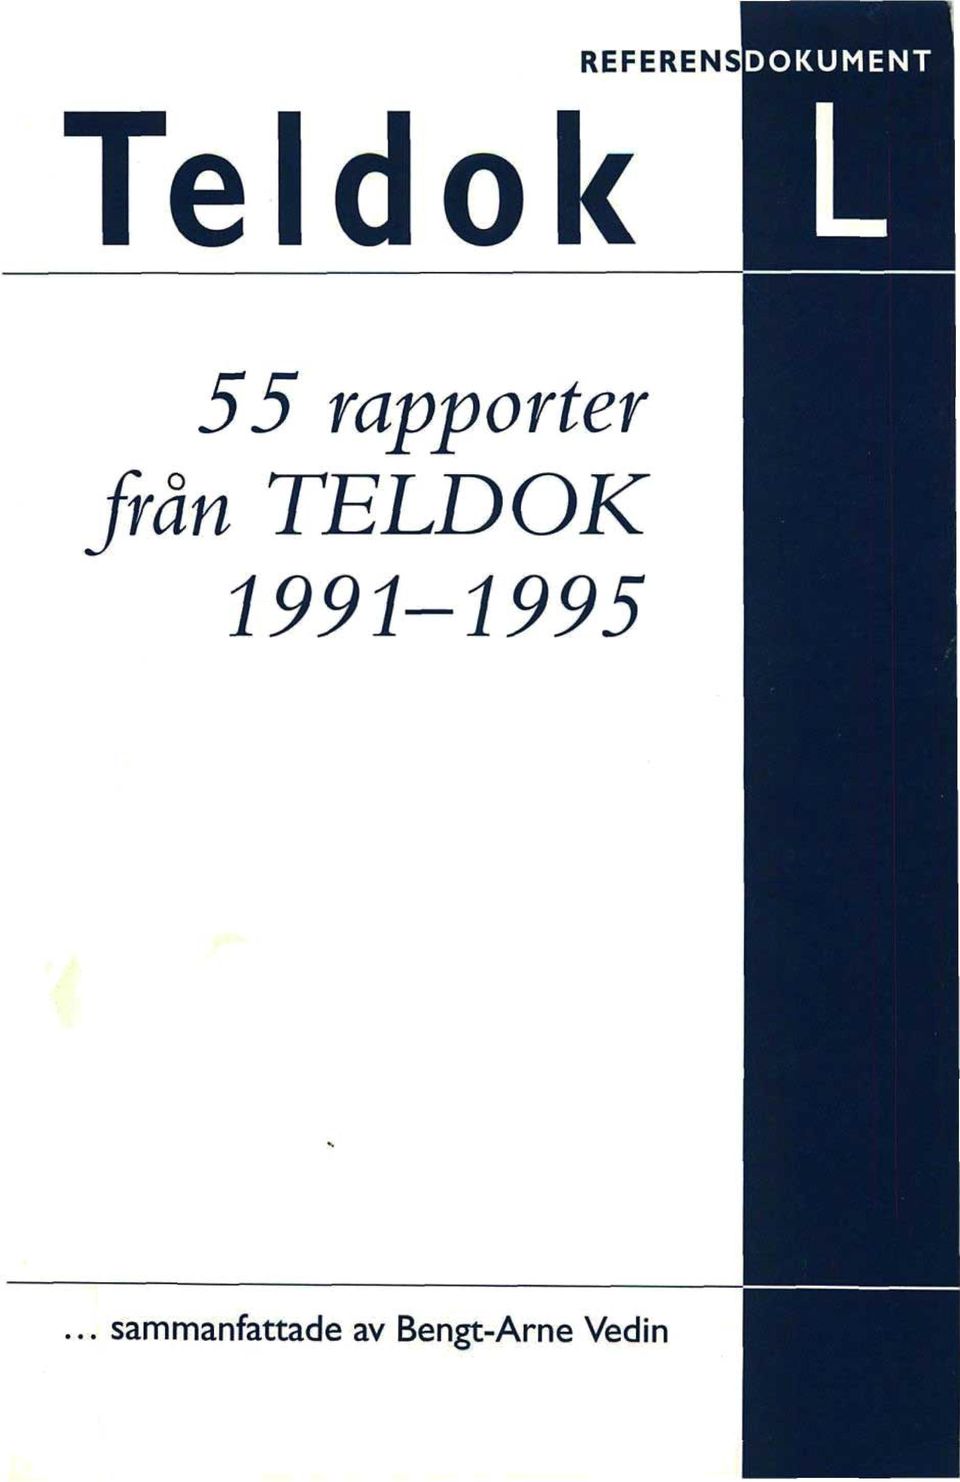 från TELDOK 1991-1995.